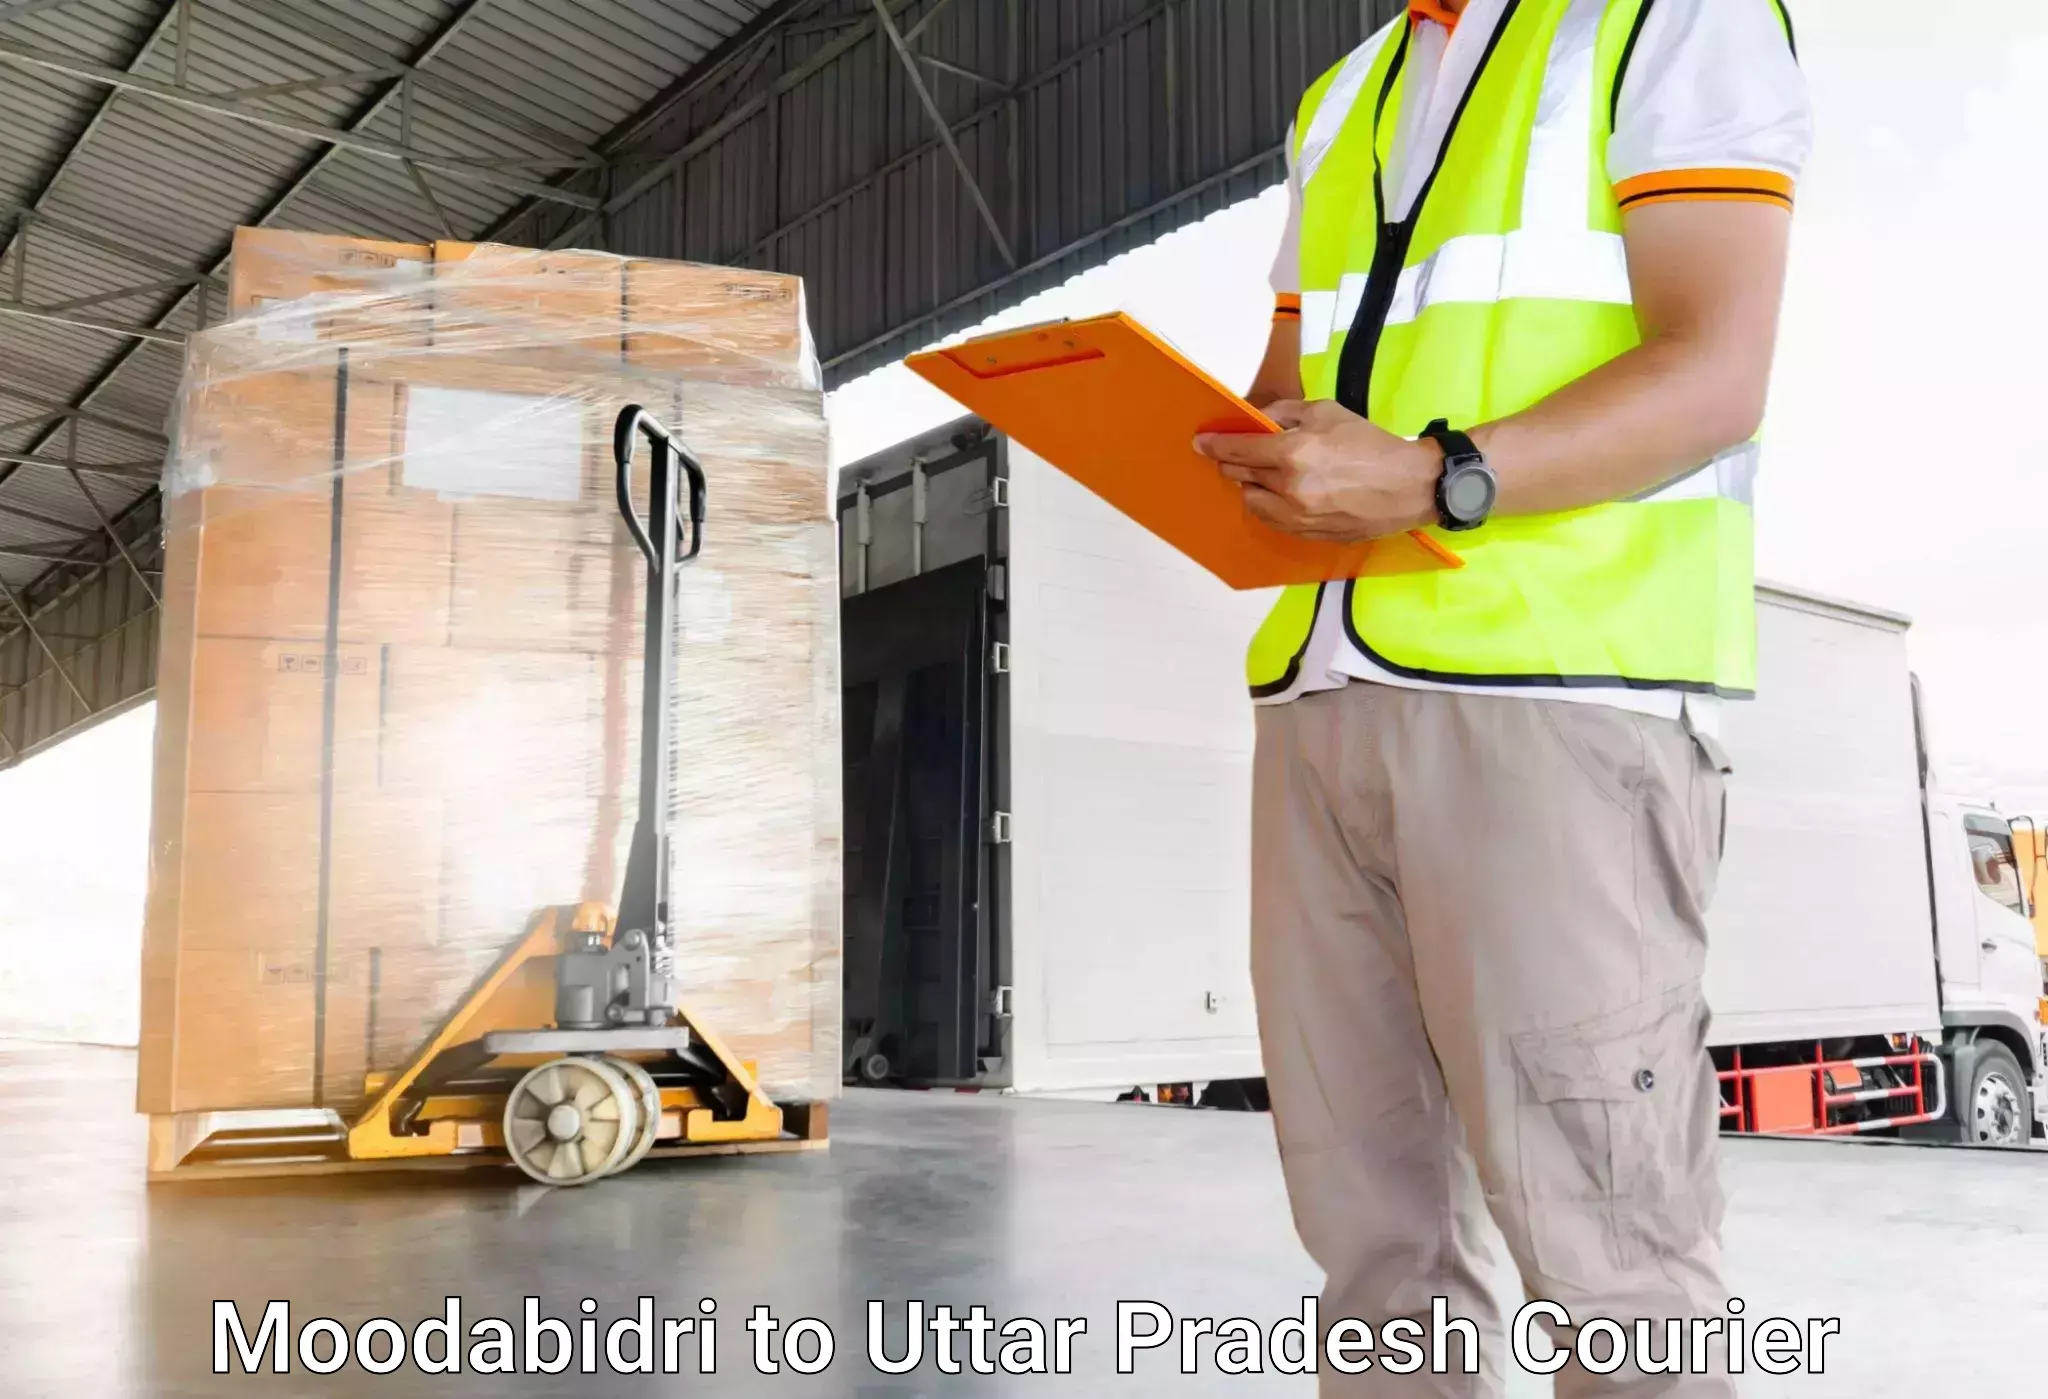 Luggage delivery network Moodabidri to Agra